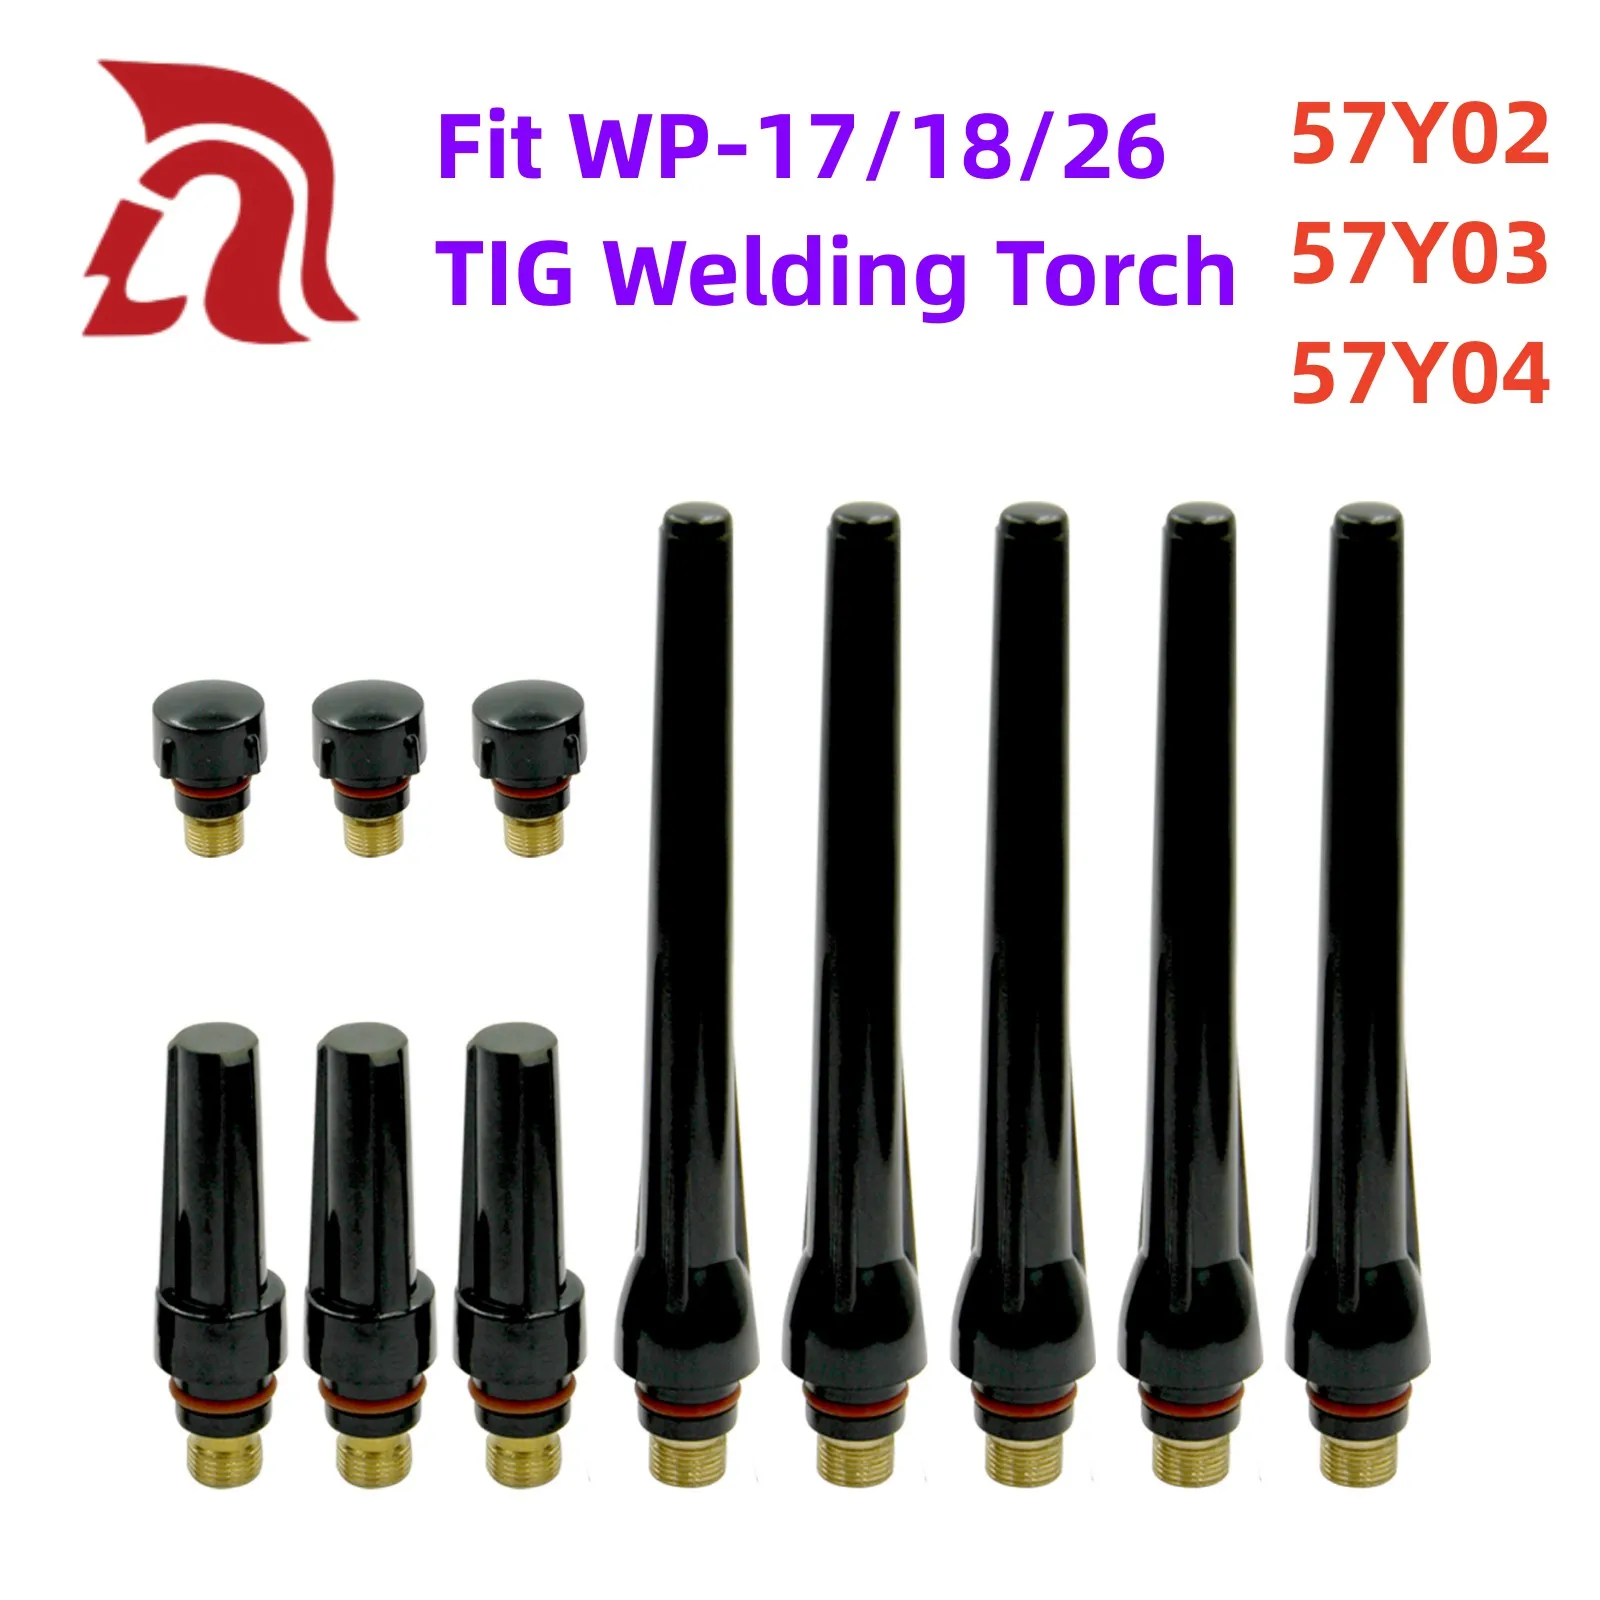 5Pcs 57Y04 57Y03 57Y02 TIG Welding Torch Back Caps Long/Medium/Short Back Cap Fit For WP17/18/26